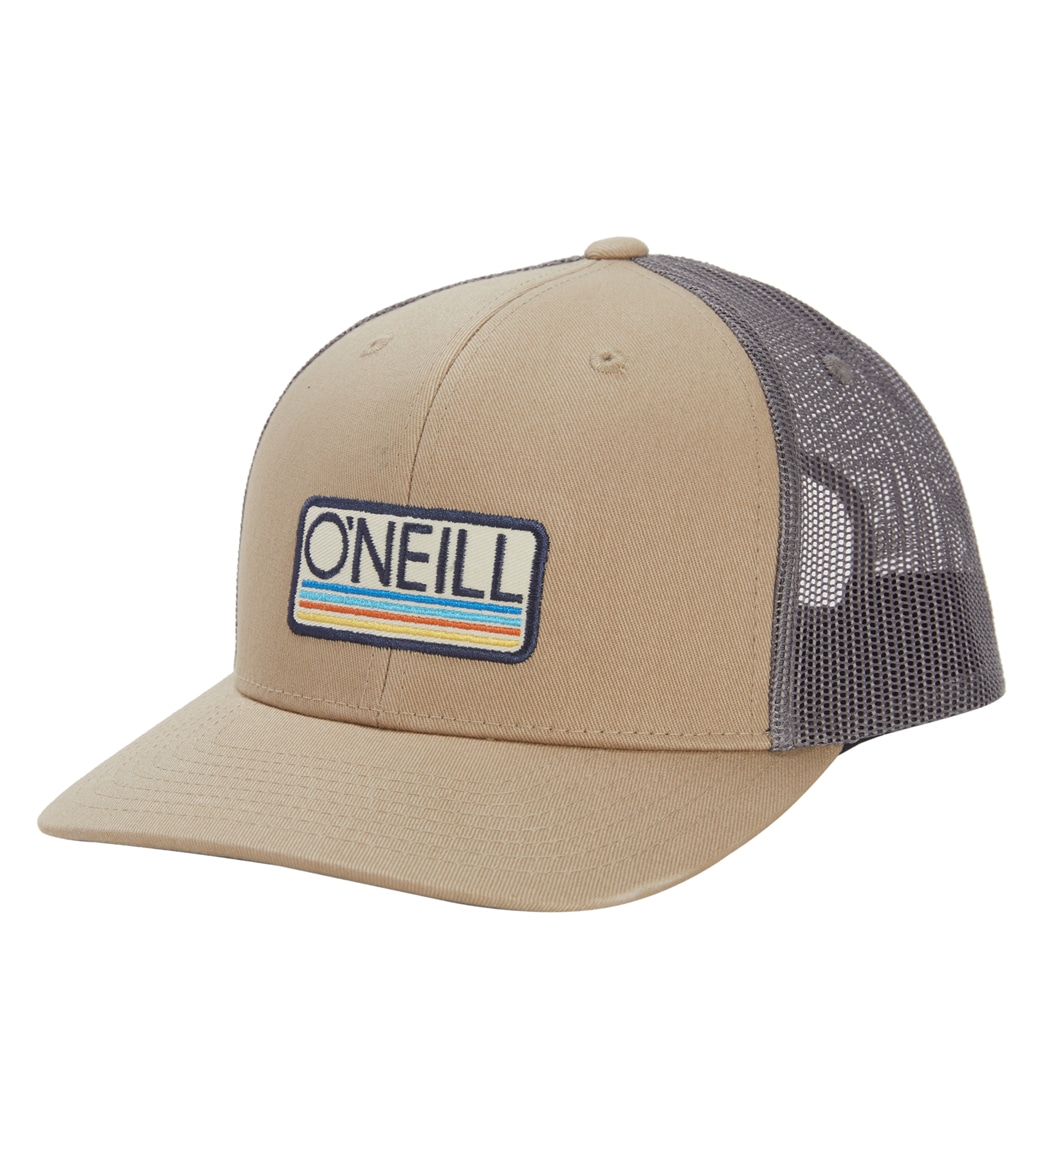 O'neill Men's Headquarters Trucker Hat - Khaki One Size Cotton/Polyester - Swimoutlet.com